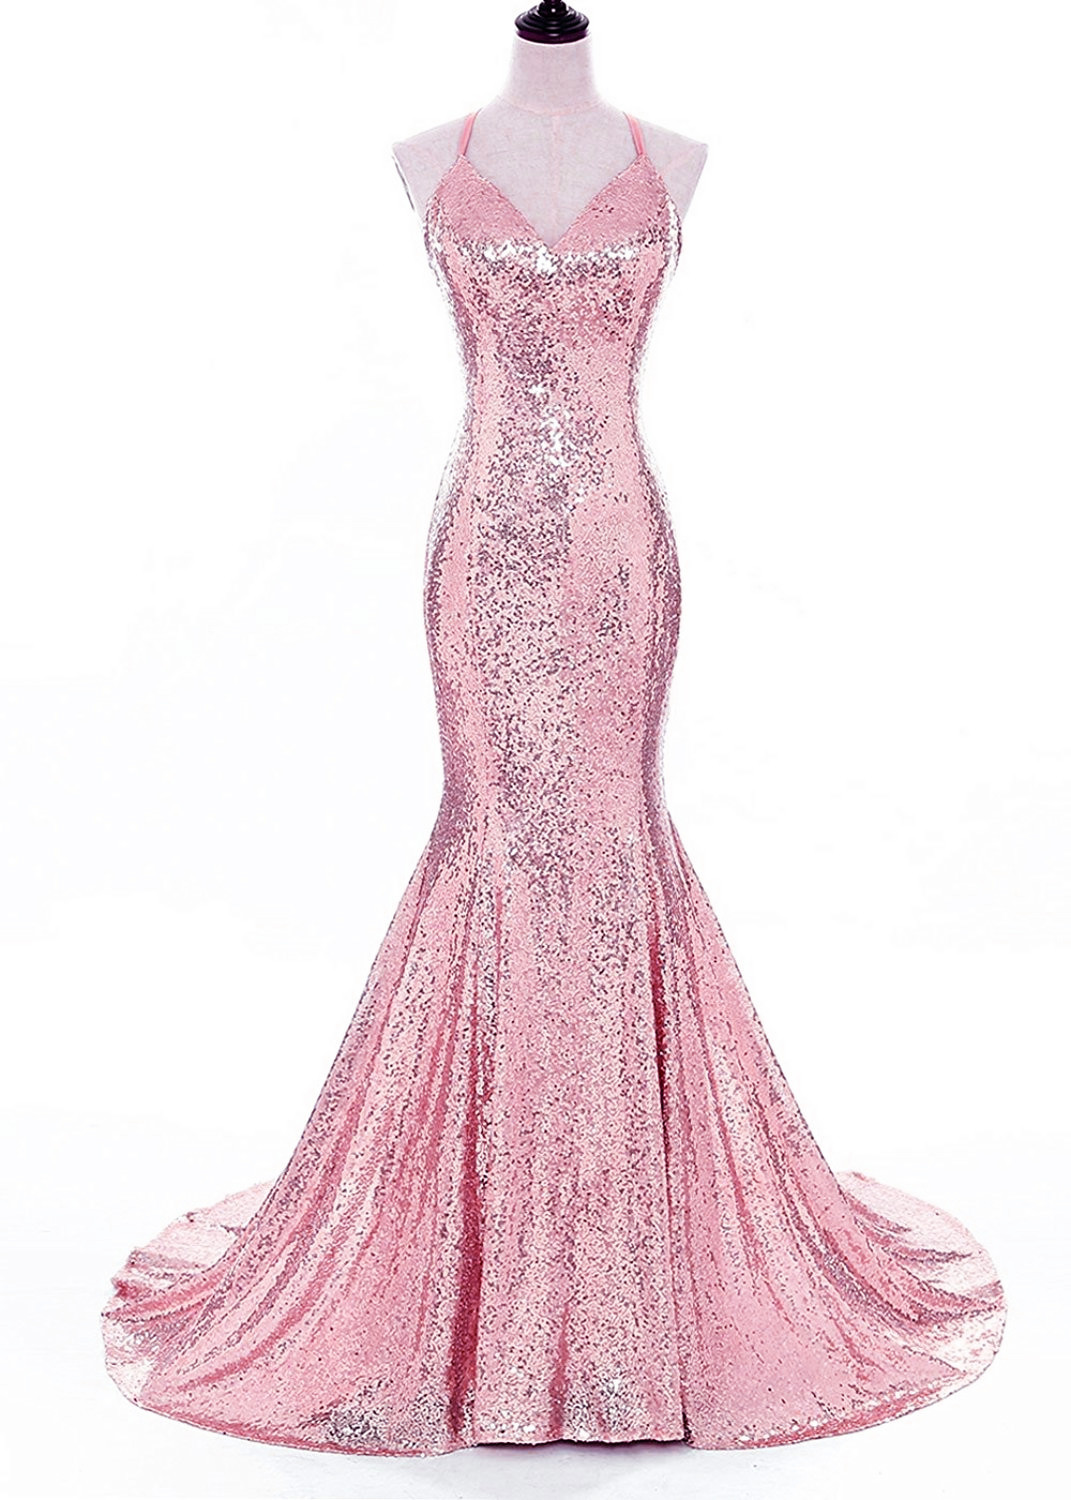 Simple Mermaid Sequins Formal Prom Dress, Beautiful Long Prom Dress Sa937